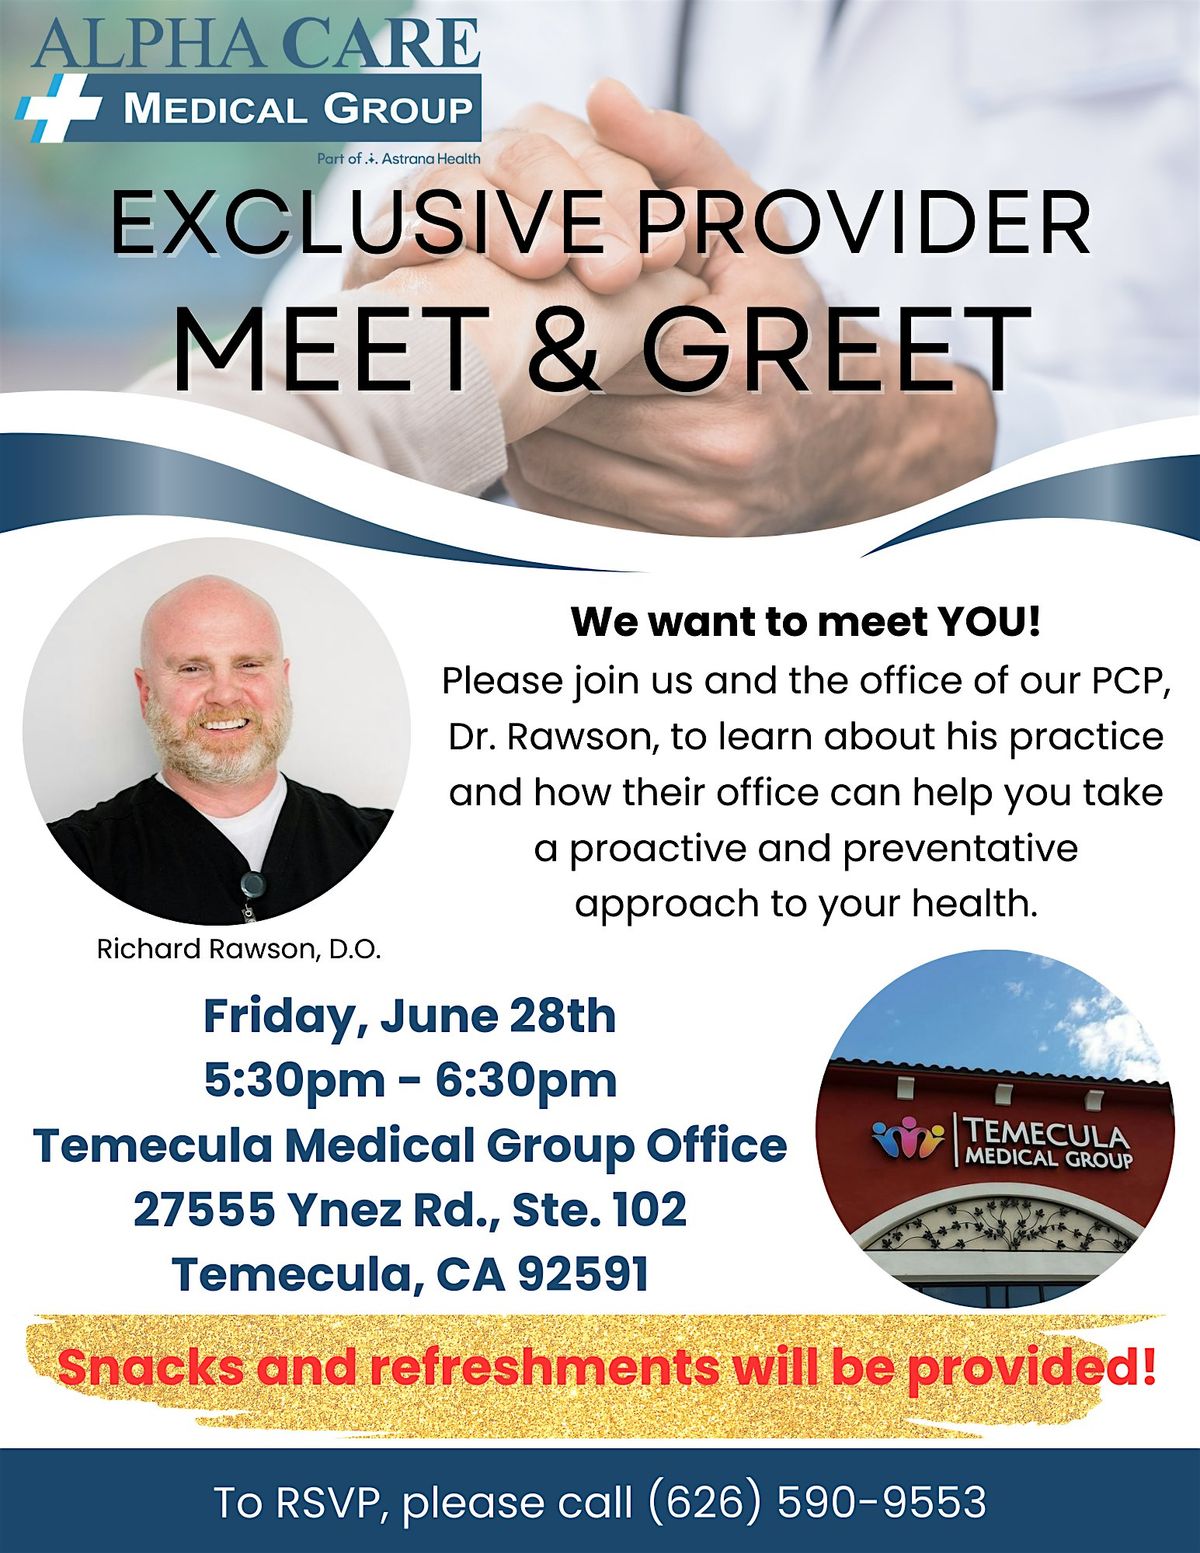 Exclusive Provider Meet & Greet - Dr. Richard Rawson